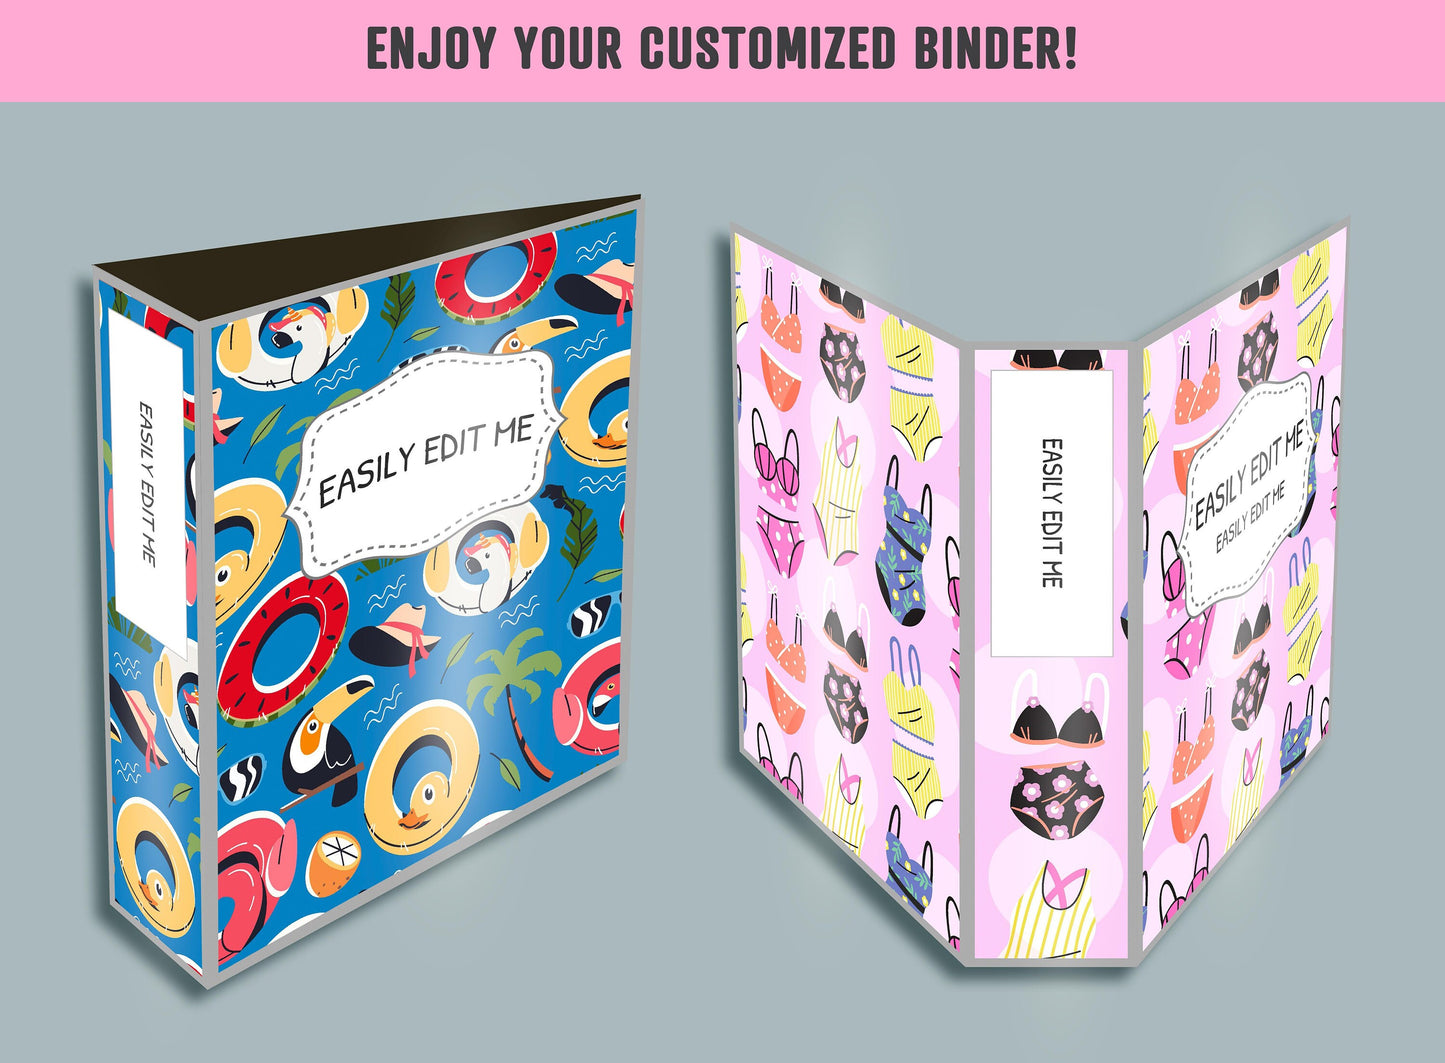 Colorful Summer Binder Cover, 10 Printable/Editable Binder Covers + Spines, Planner Template, Teacher/School Binder Label/Insert